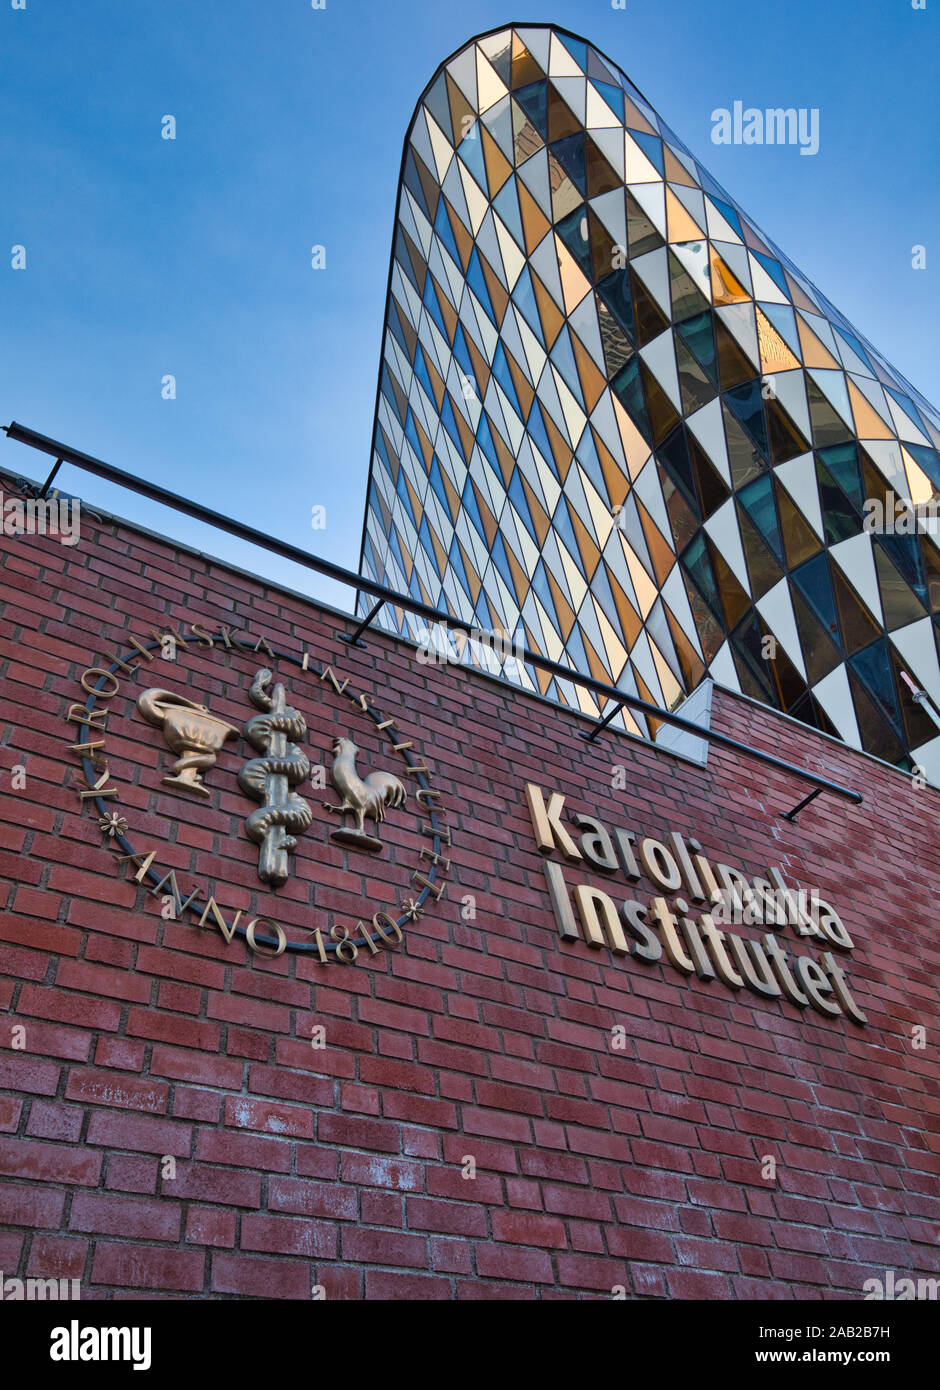 Karolinska Institute (Karolinska Institutet) sign and logo on wall with the Aula Medica glass auditorium behind, Solna, Stockholm, Sweden Stock Photo